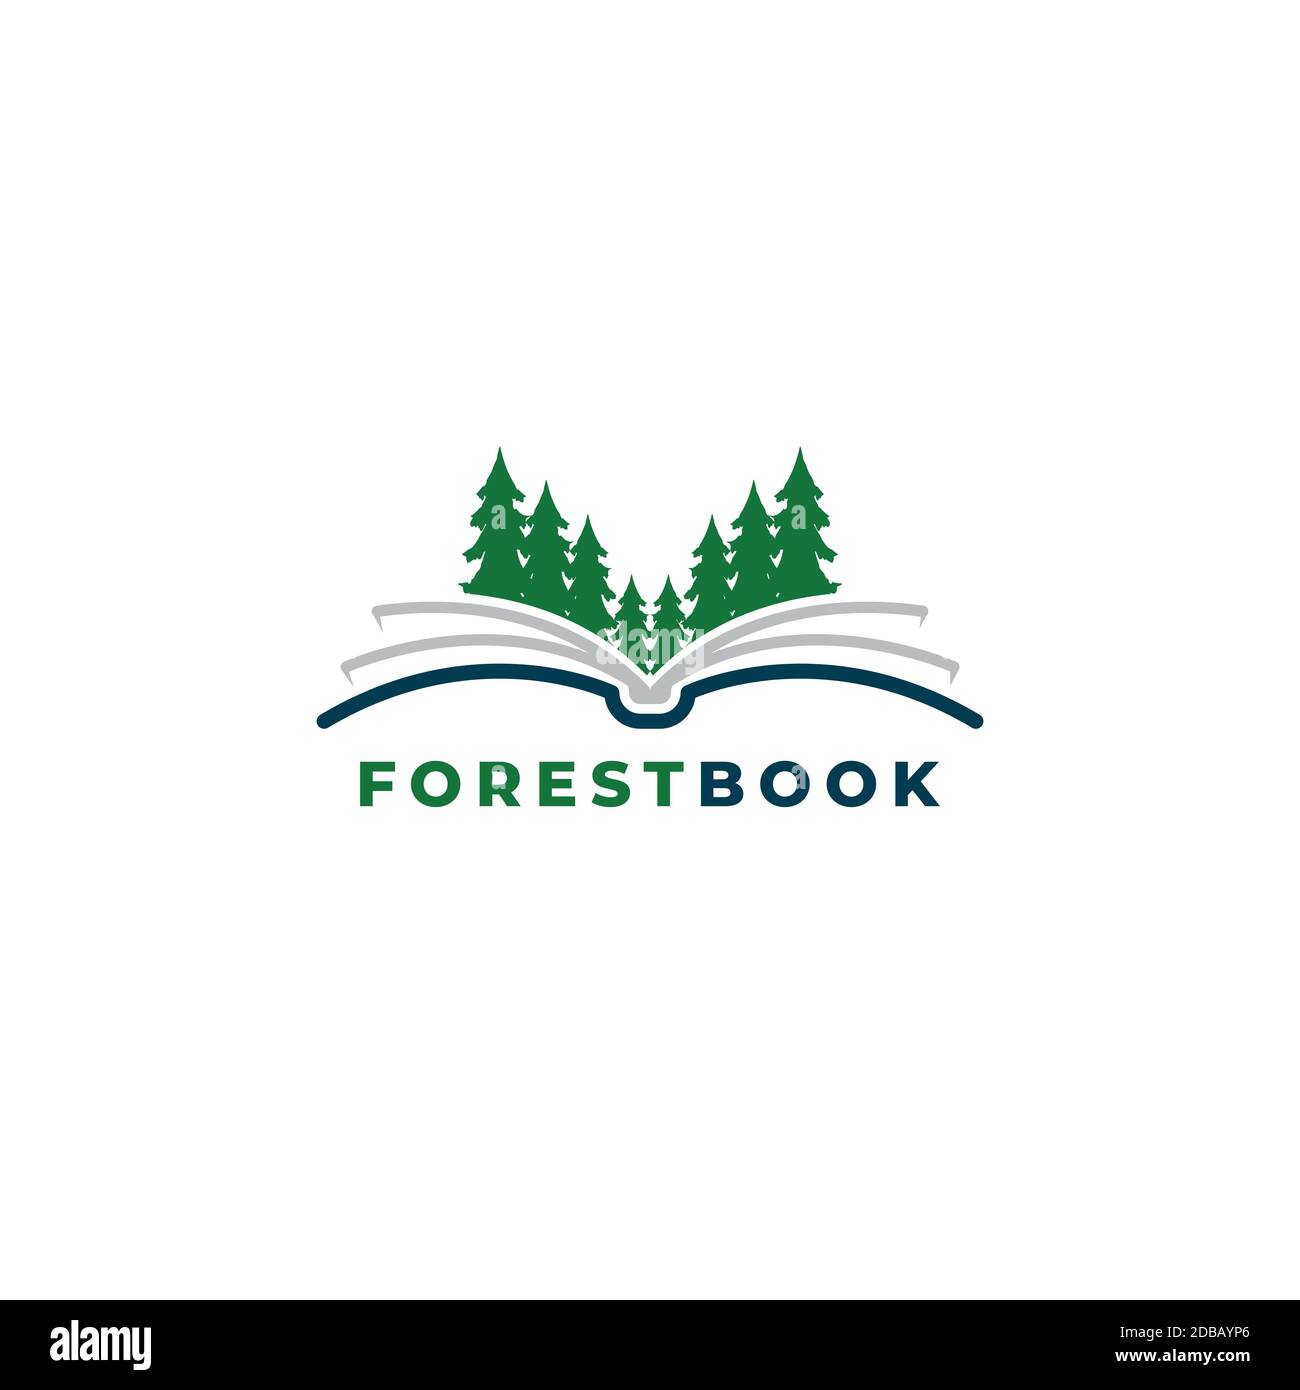 Forest book logo design illustration vector template Stock Vector